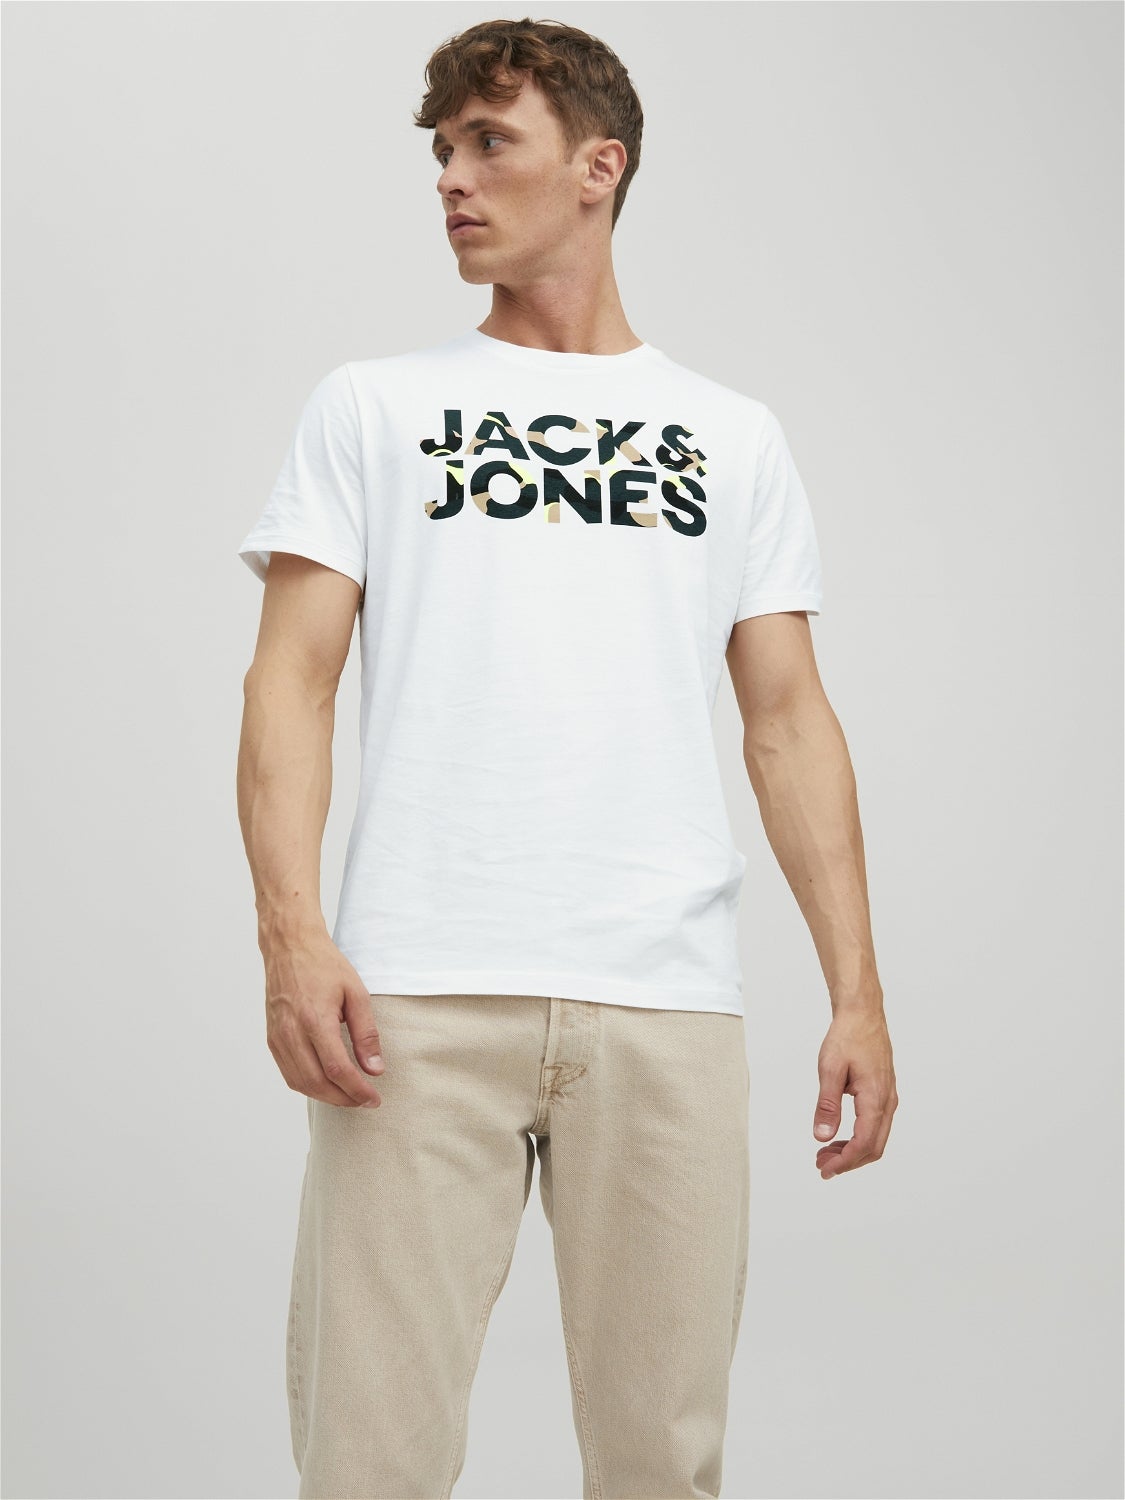 White XXL Jack & Jones polo discount 40% MEN FASHION Shirts & T-shirts Basic 